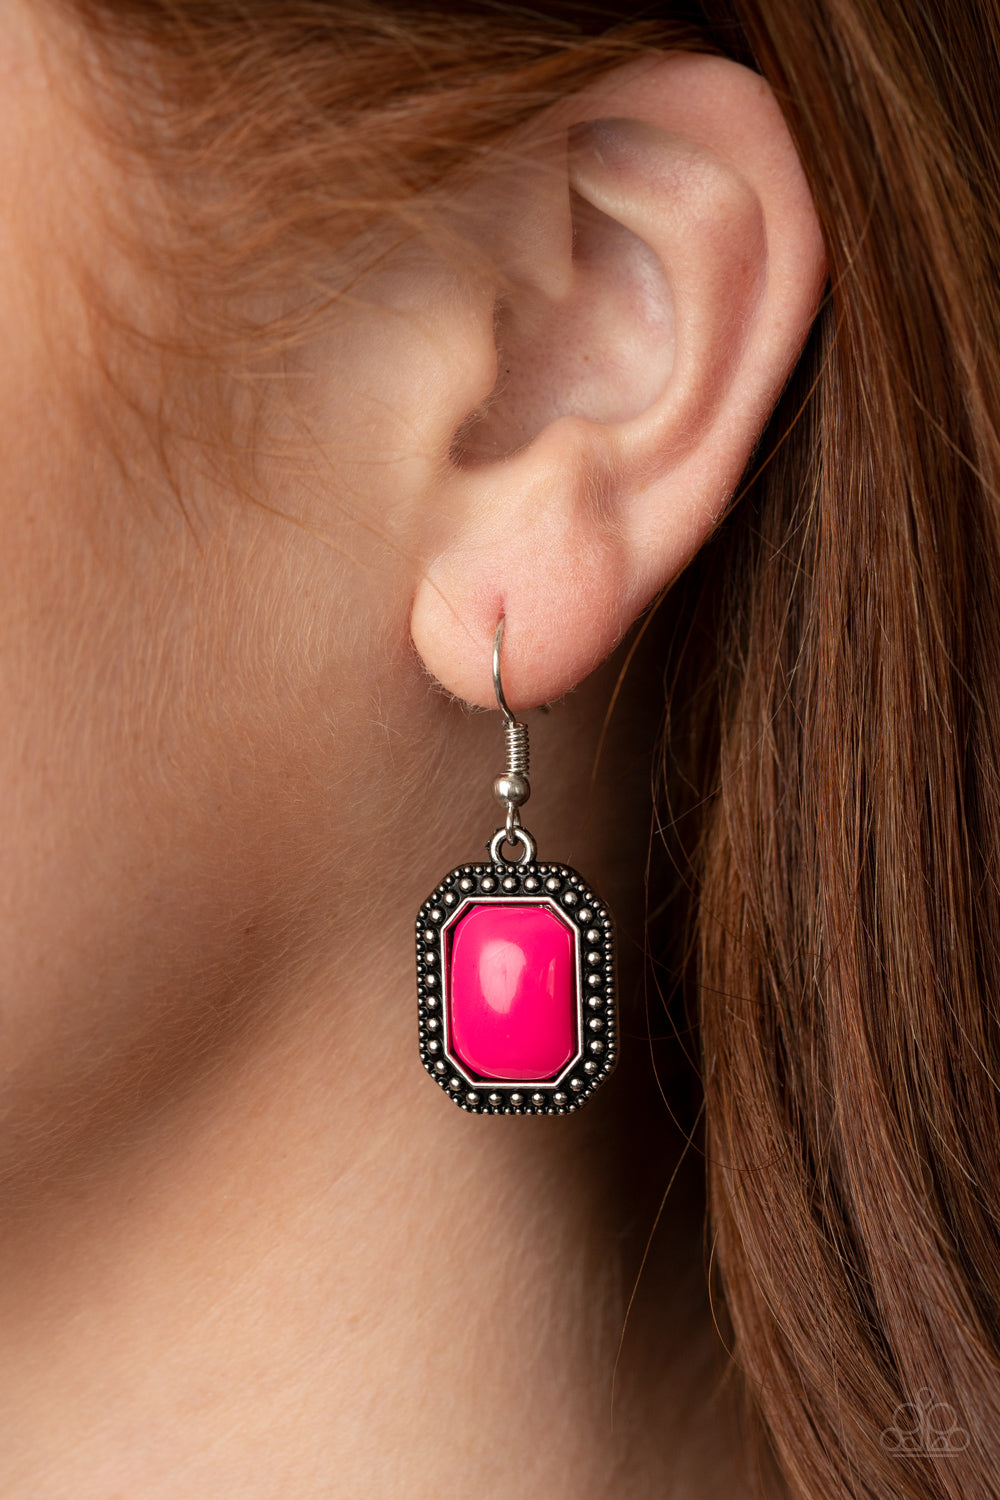 Paparazzi Accessories Lets Get Loud - Pink Necklaces - Lady T Accessories